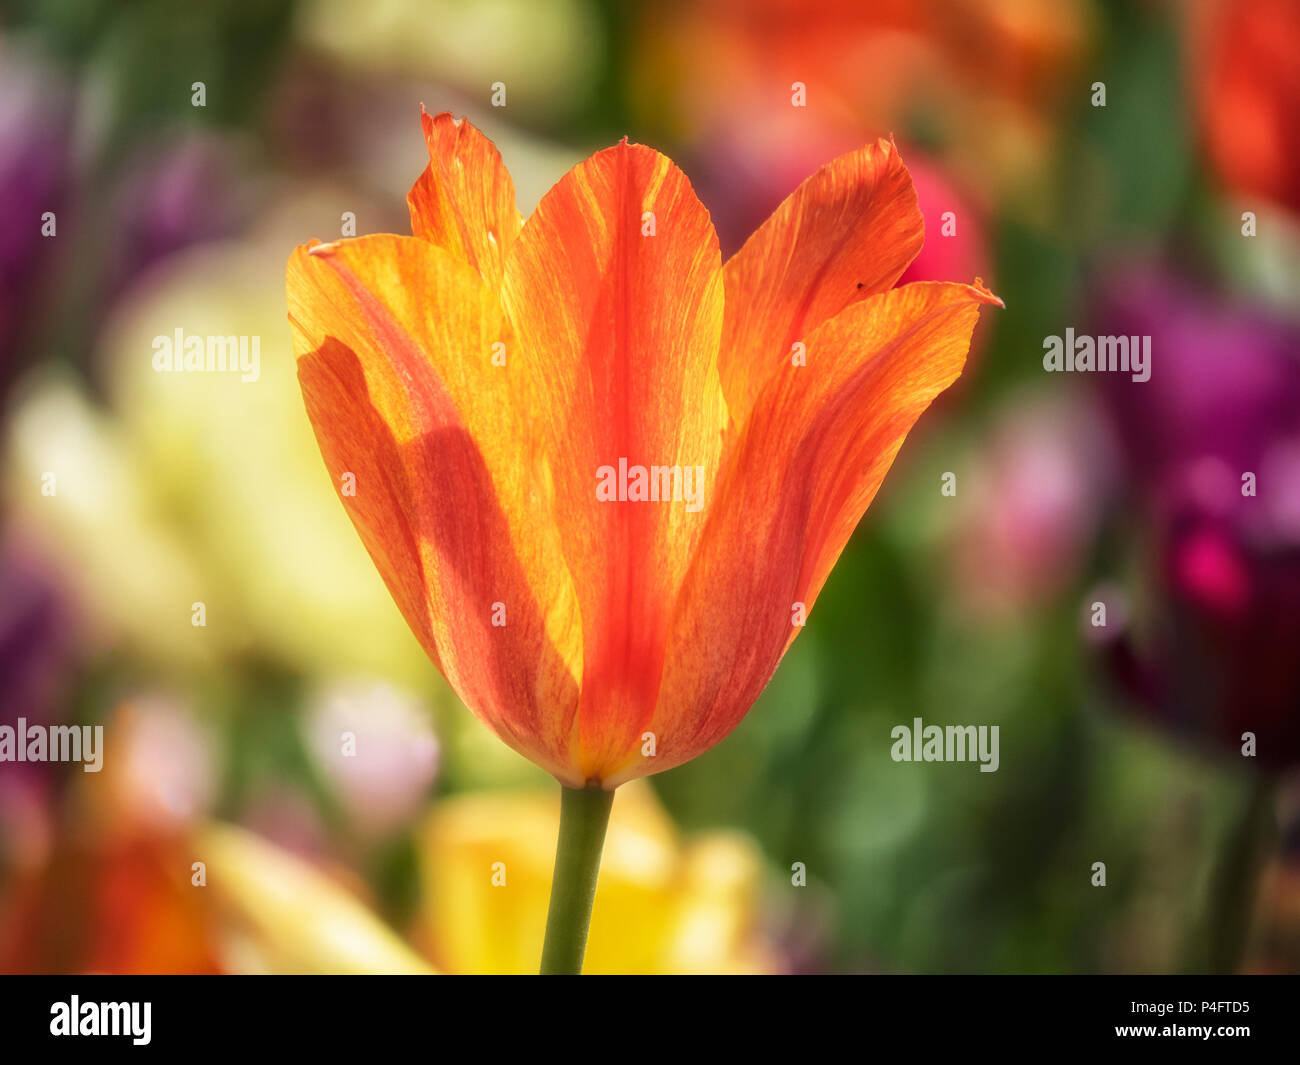 BACKGROUND - Orange Tulip against multi-colour background Stock Photo